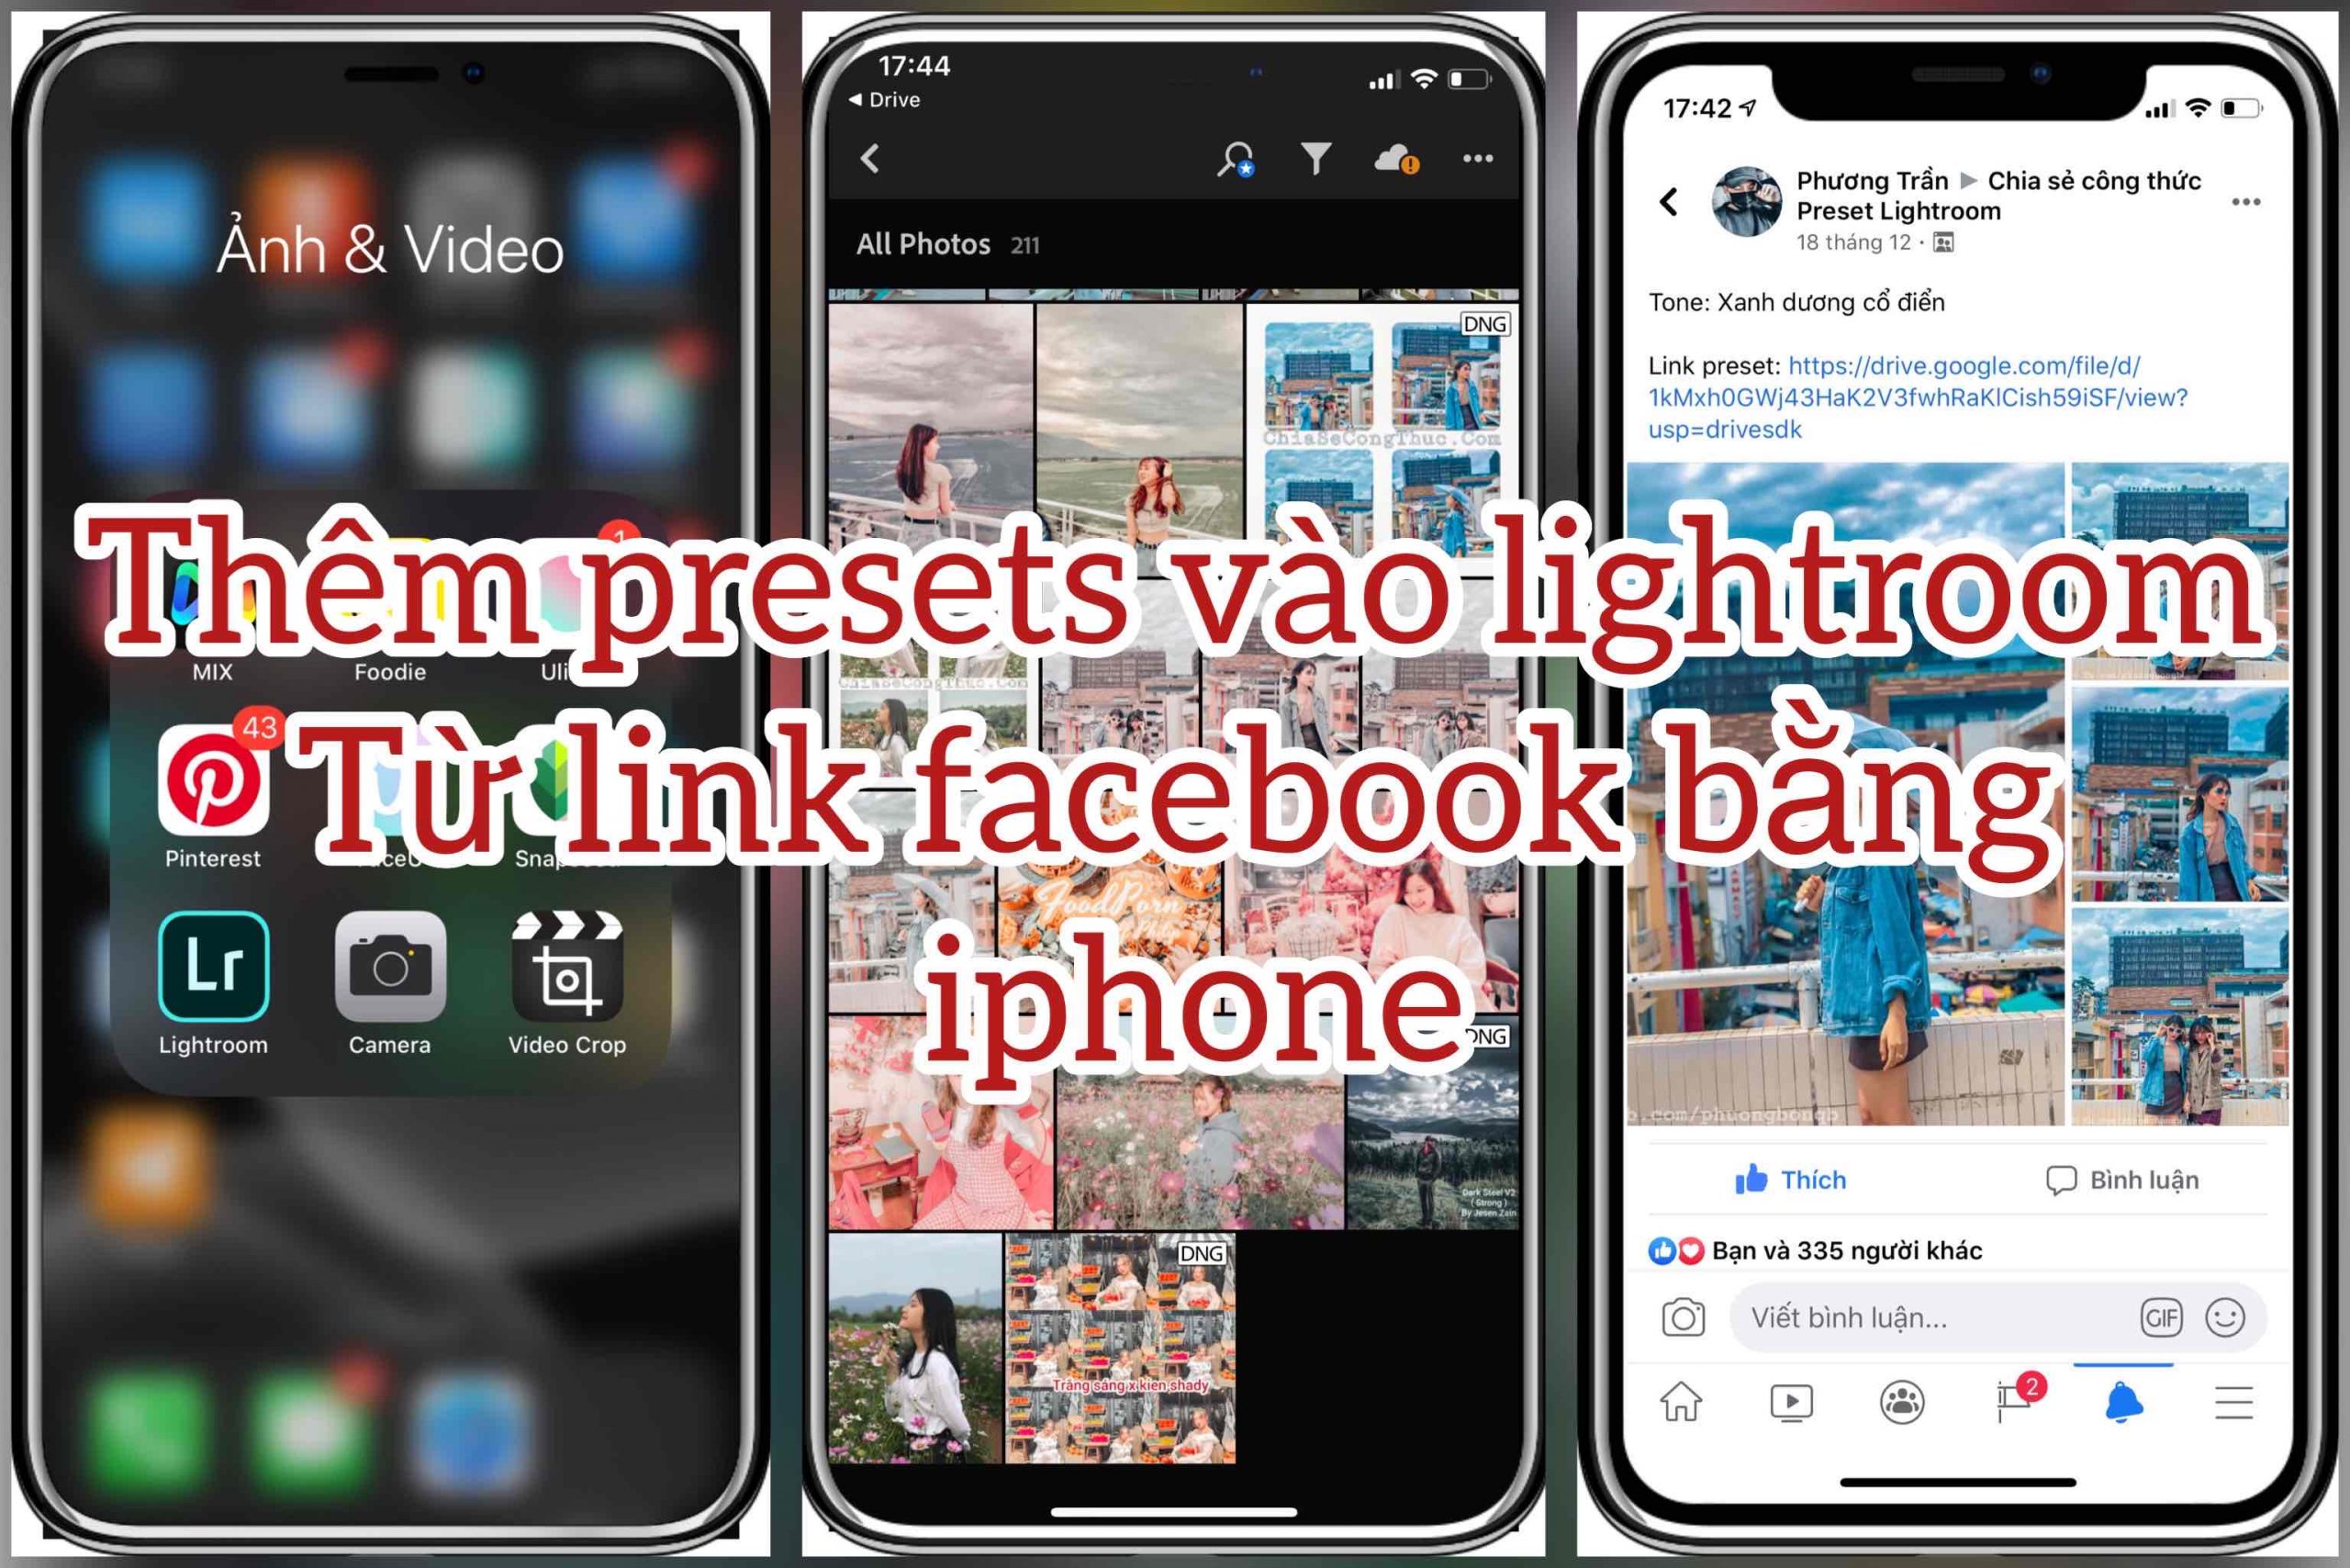 Hướng dẫn Tải Presets từ link Facebook bằng Iphone